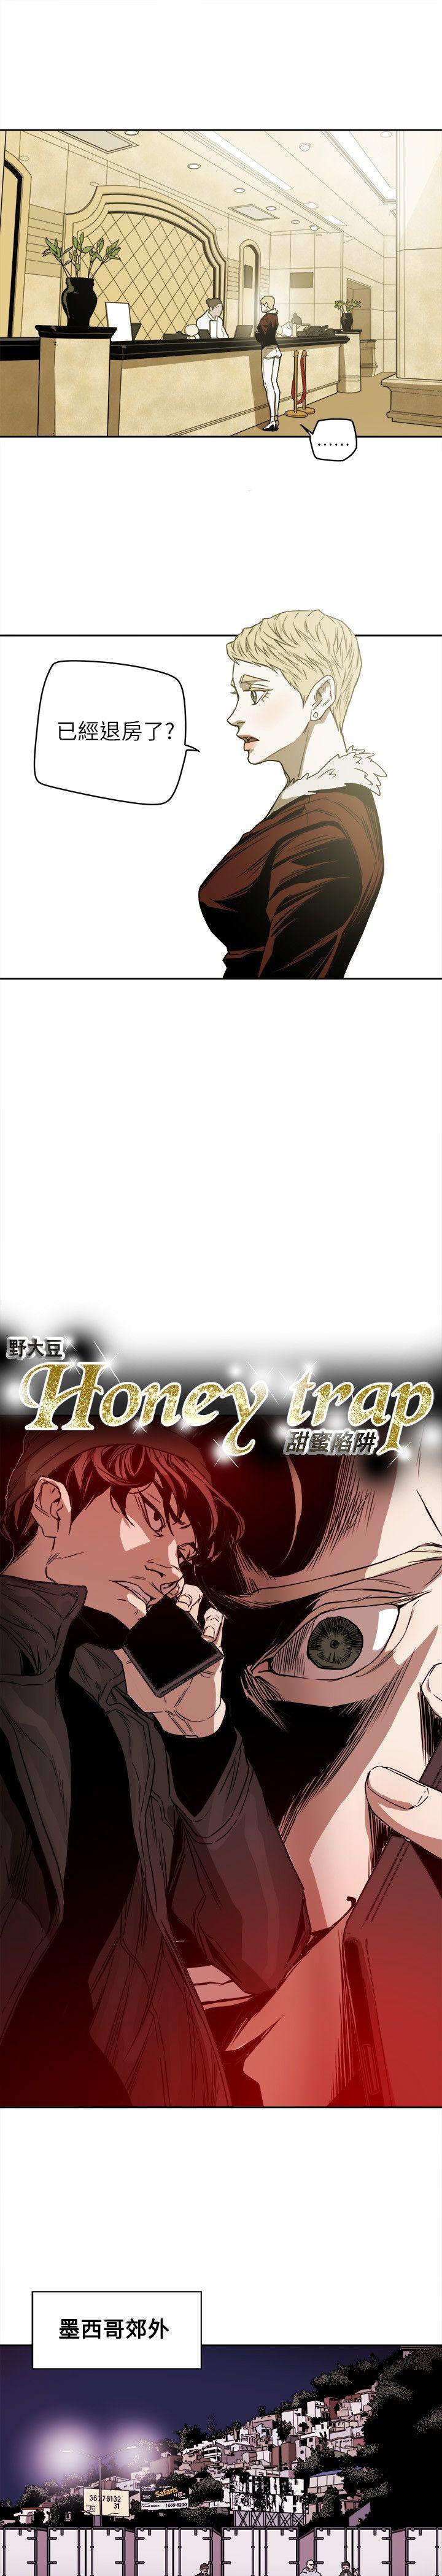 Honey trap 甜蜜陷阱  第80话 漫画图片9.jpg